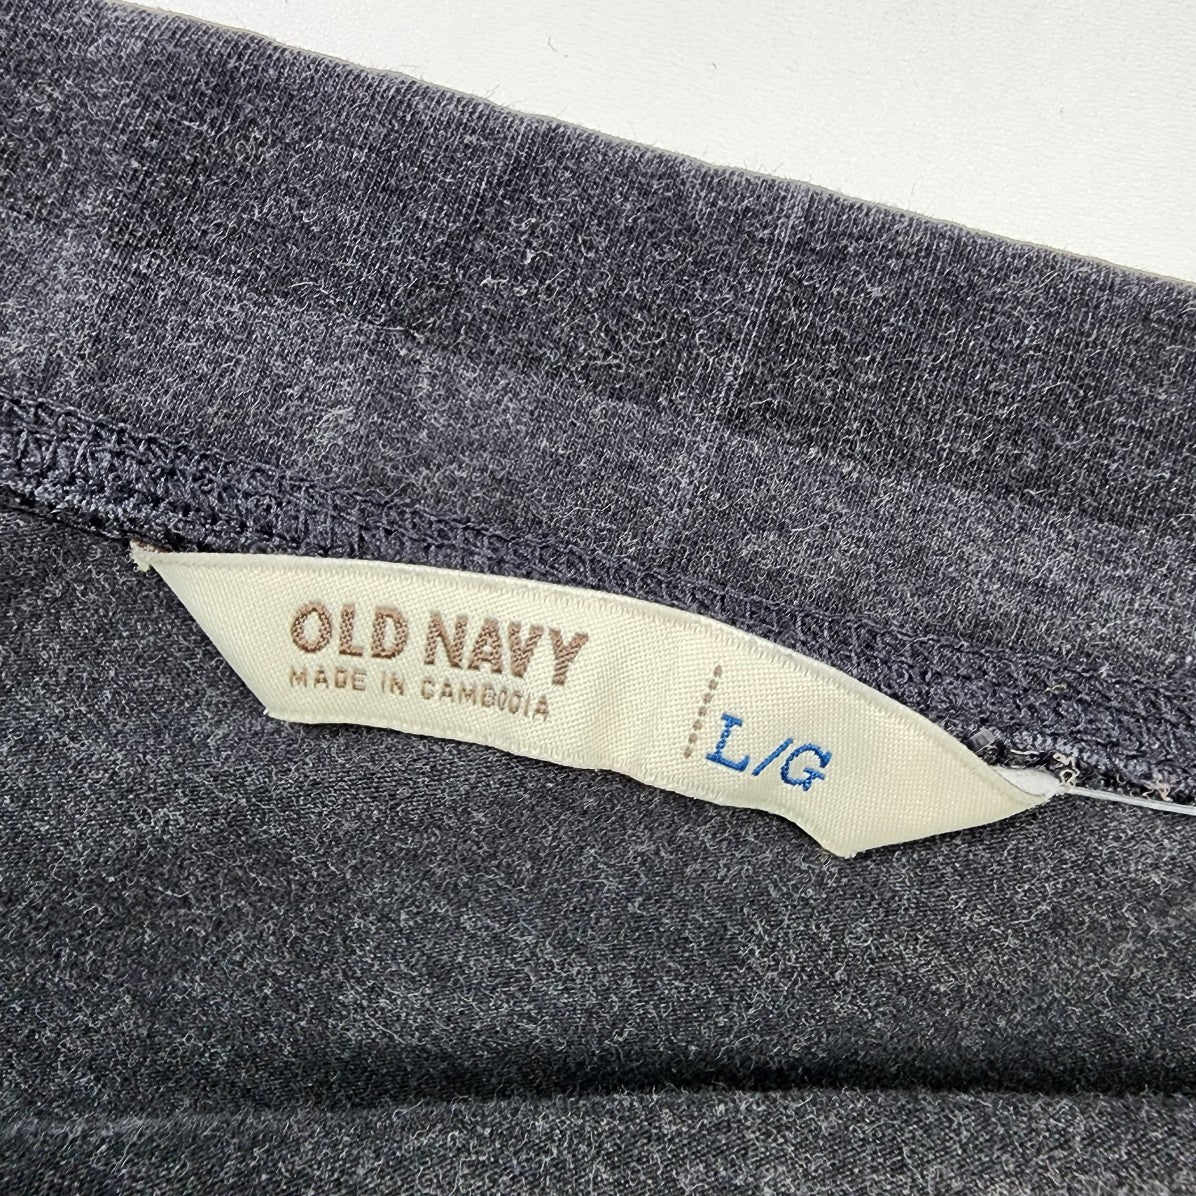 Old Navy Grey Striped Cotton Skirt Size L